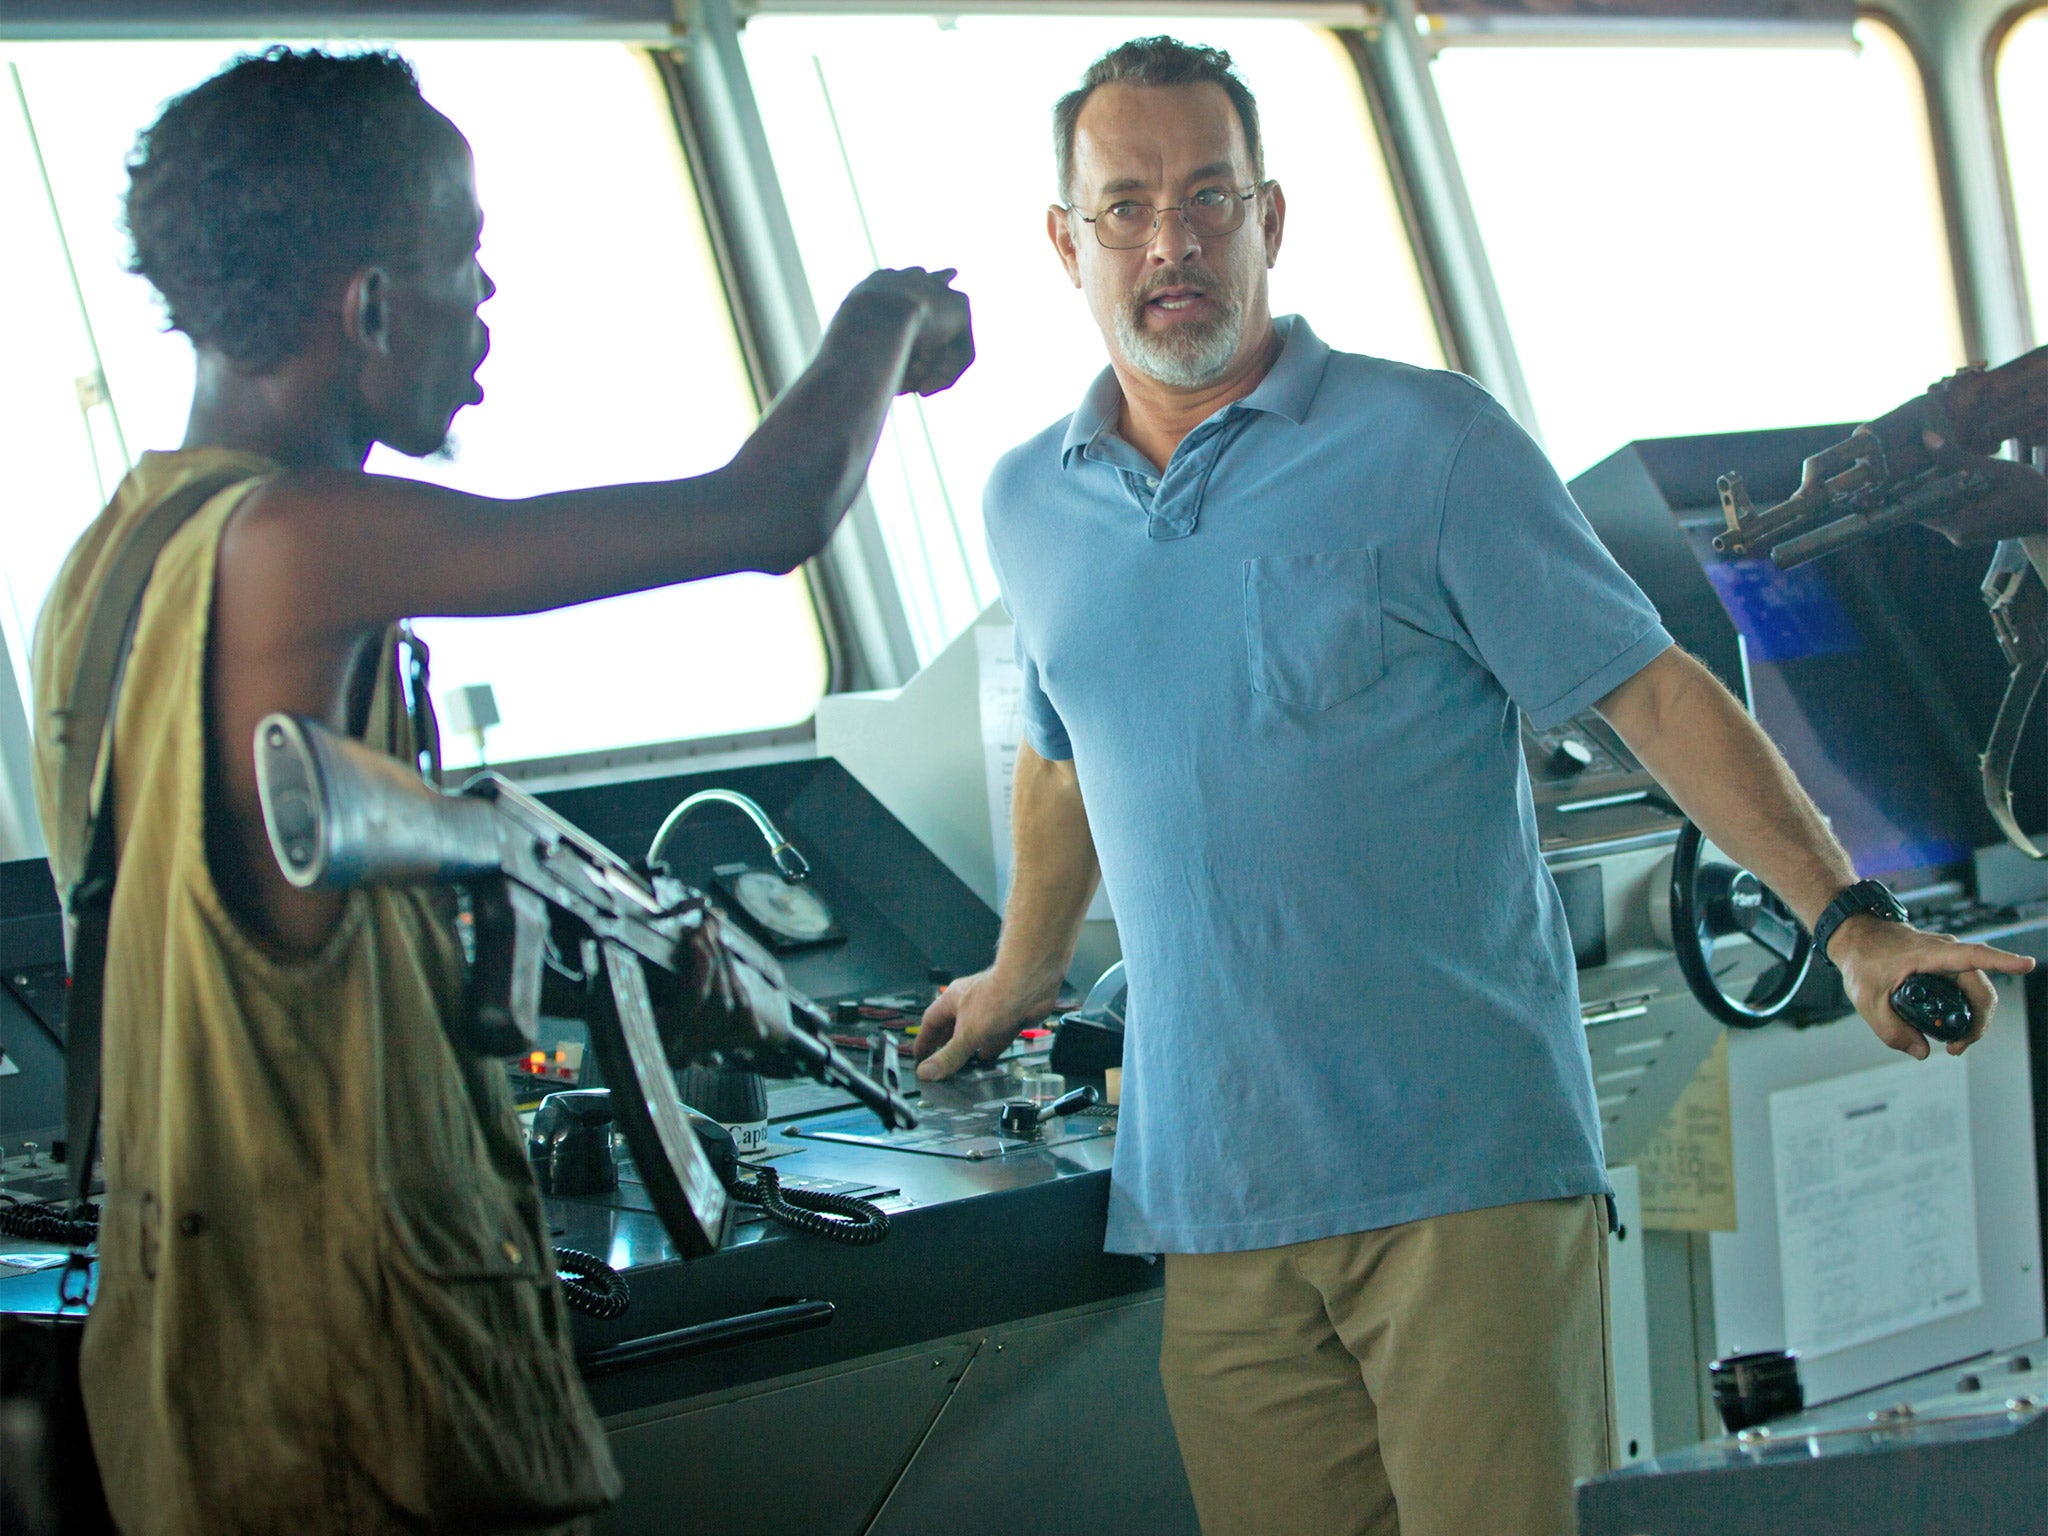 Captain Phillips actor Barkhad Abdi struggles financially despite Oscar nomination